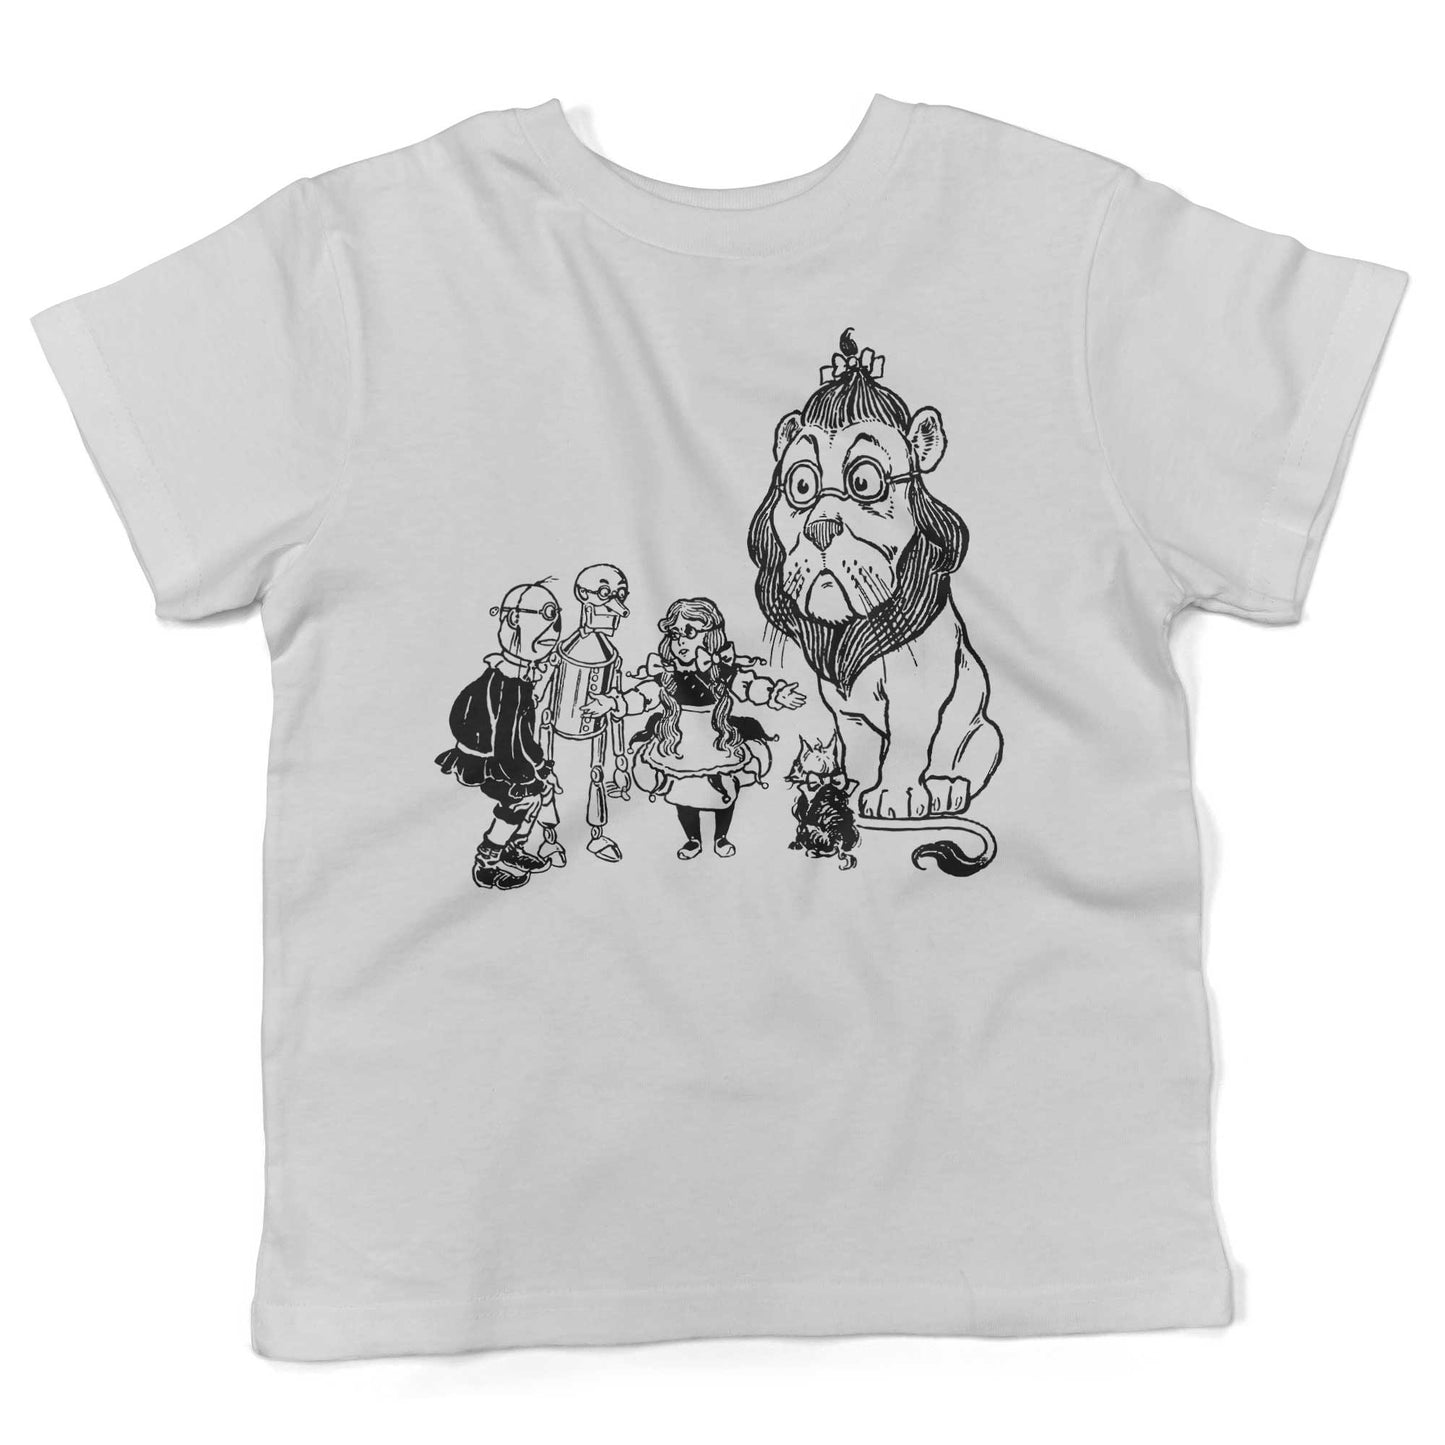 Wizard Of Oz Toddler Shirt-White-2T